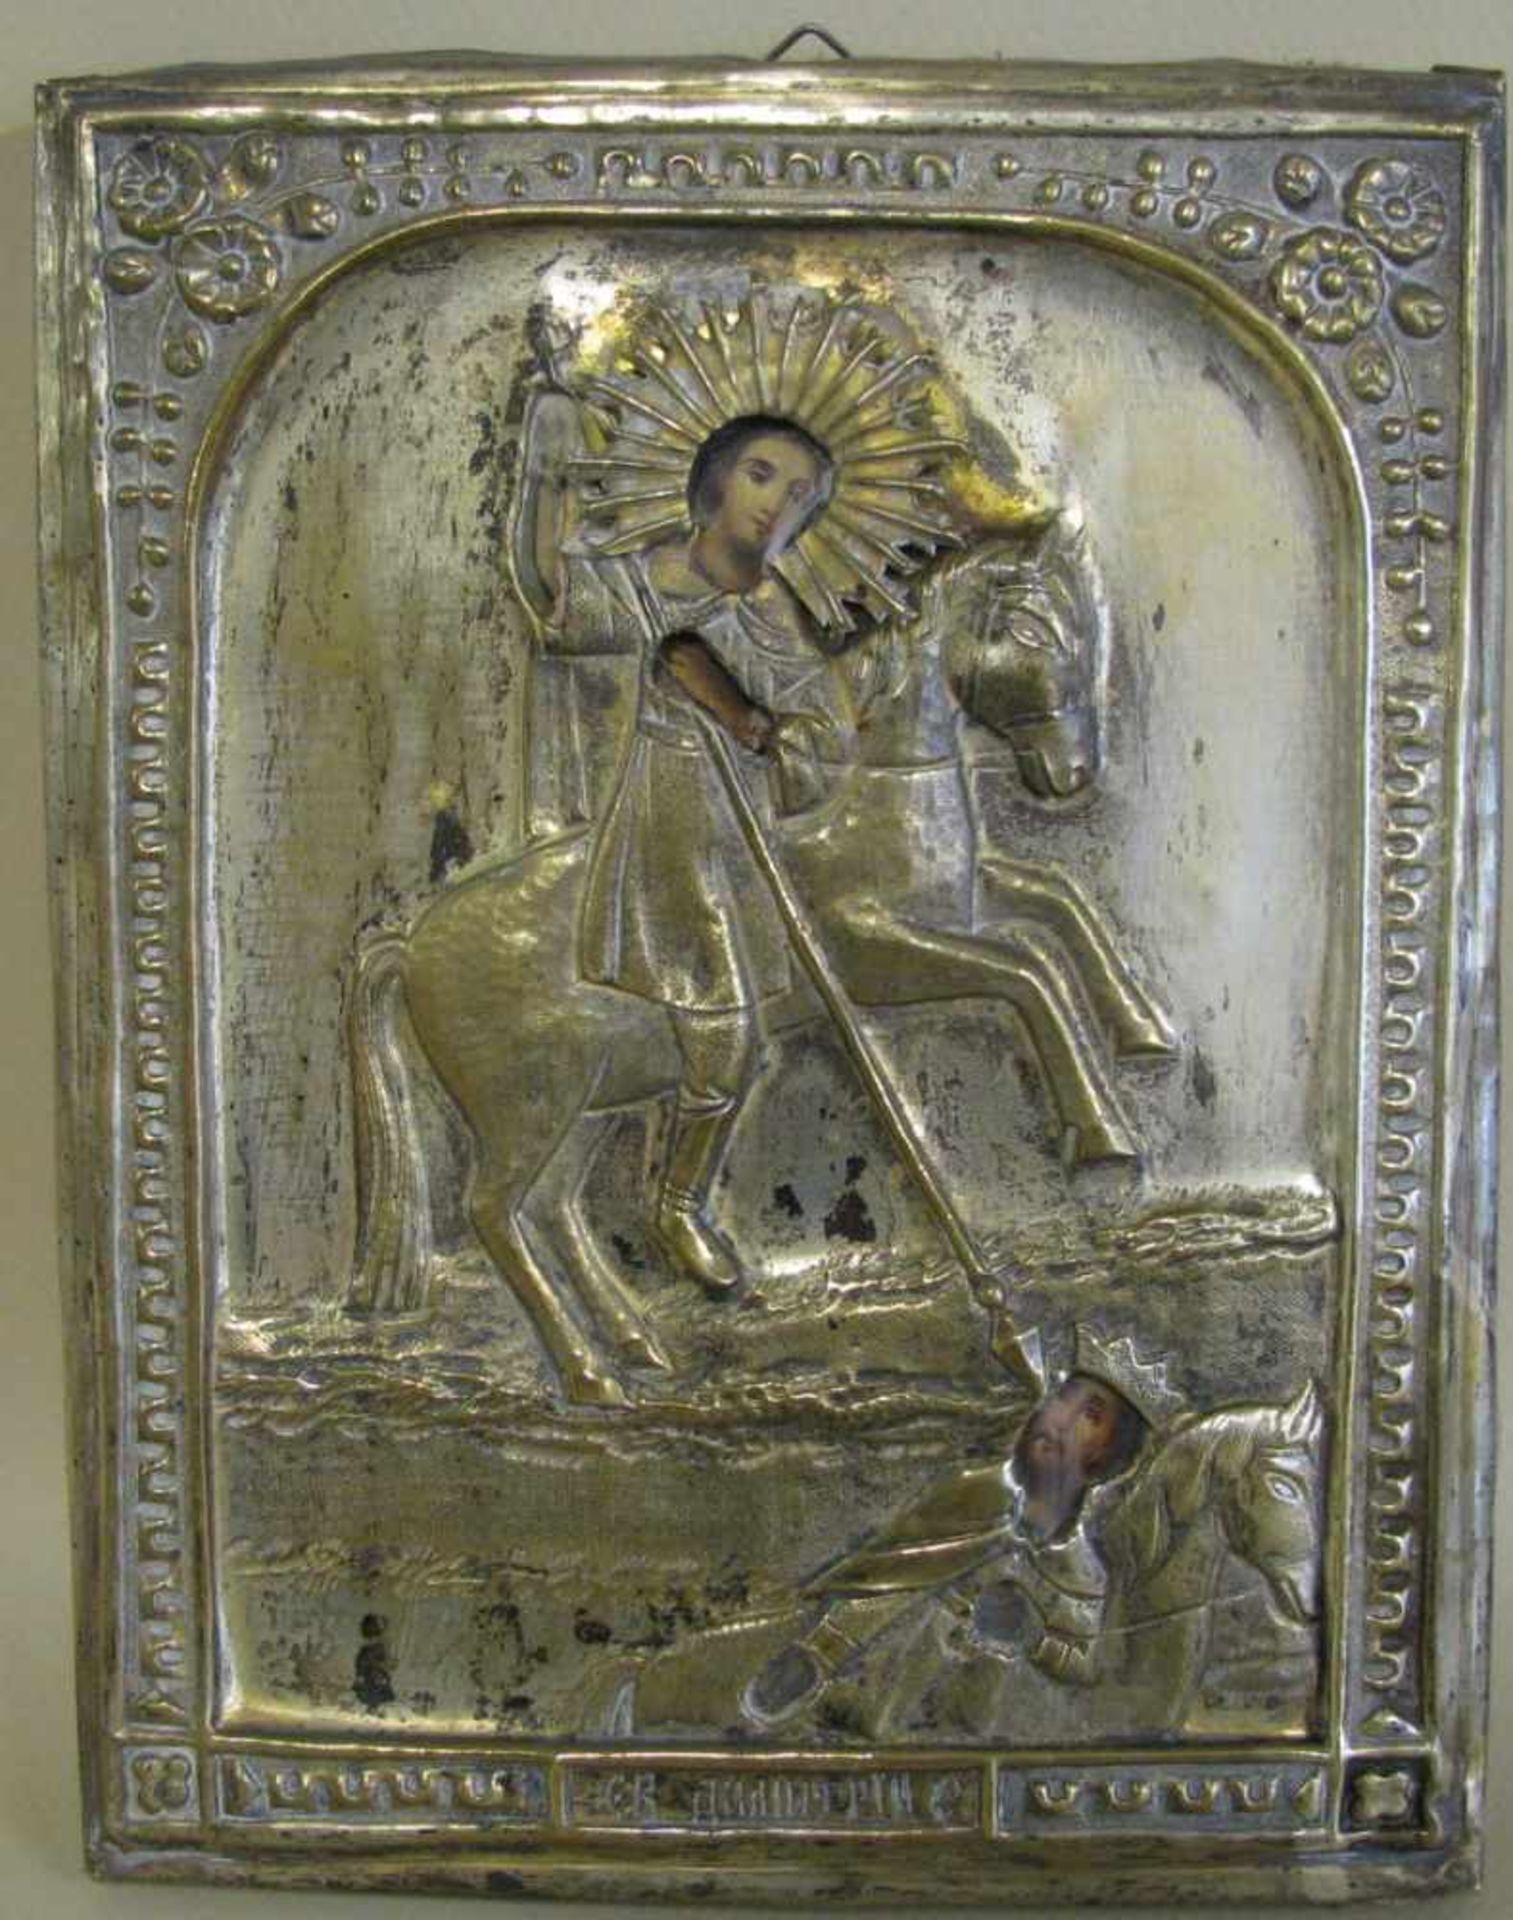 Ikone, Russland, 19. Jahrhundert, 'Heiliger zu Pferd', vergoldetes Messingoklad, 23 x 17,5 cm.